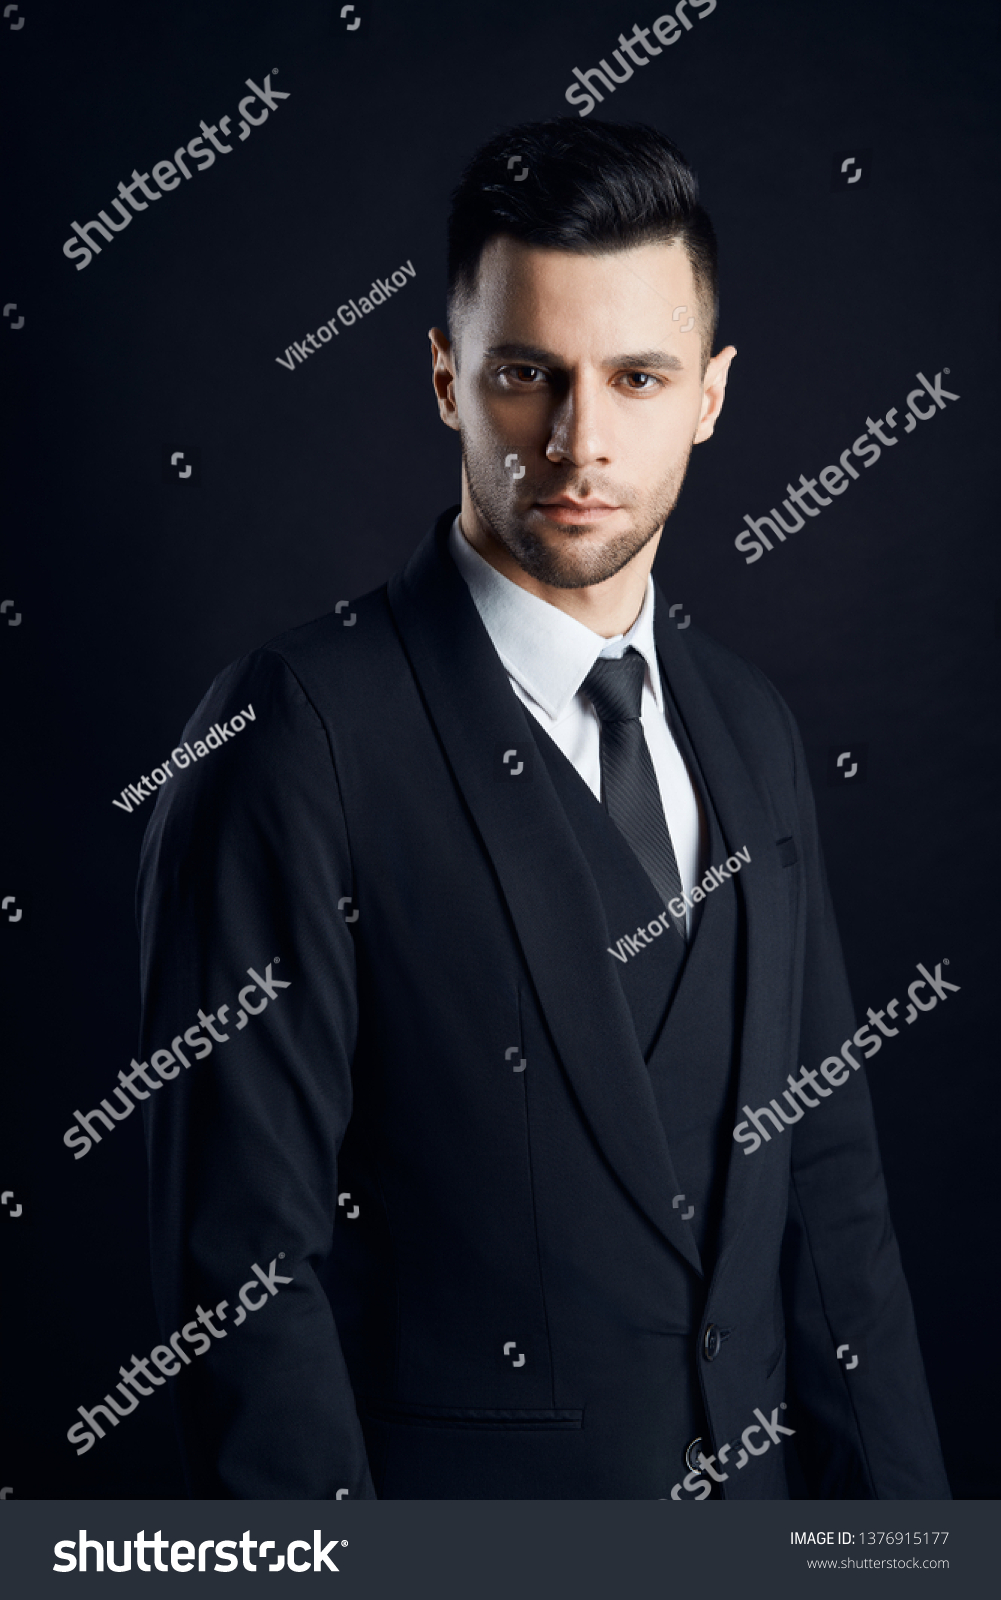 Handsome Confident Man Black Suit On Stock Photo 1376915177 | Shutterstock